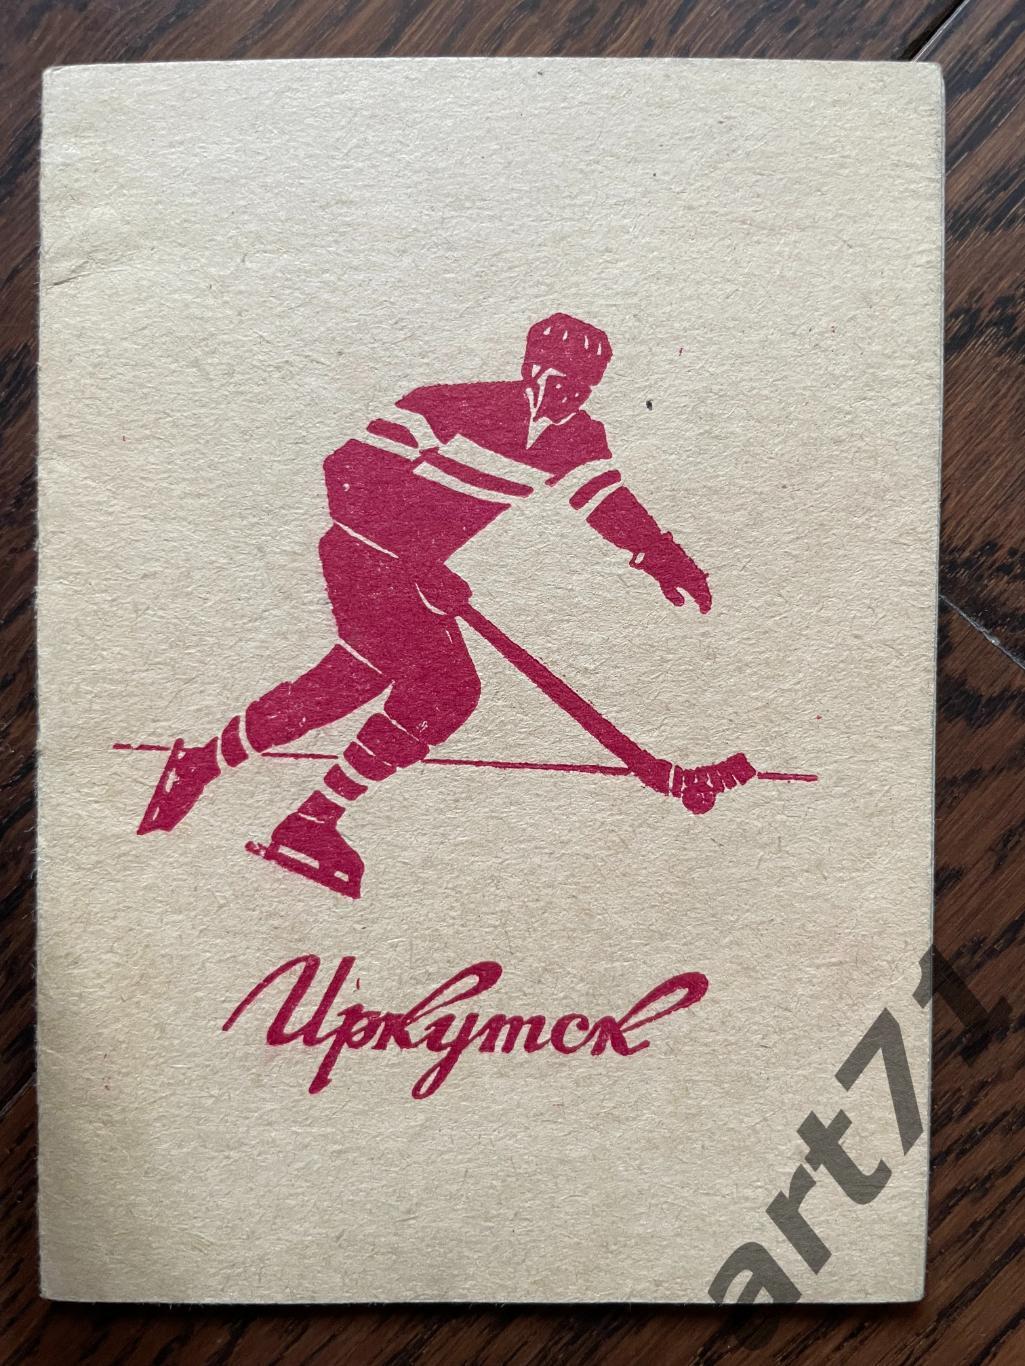 Иркутск 1969-1970 хоккей с мячом мини